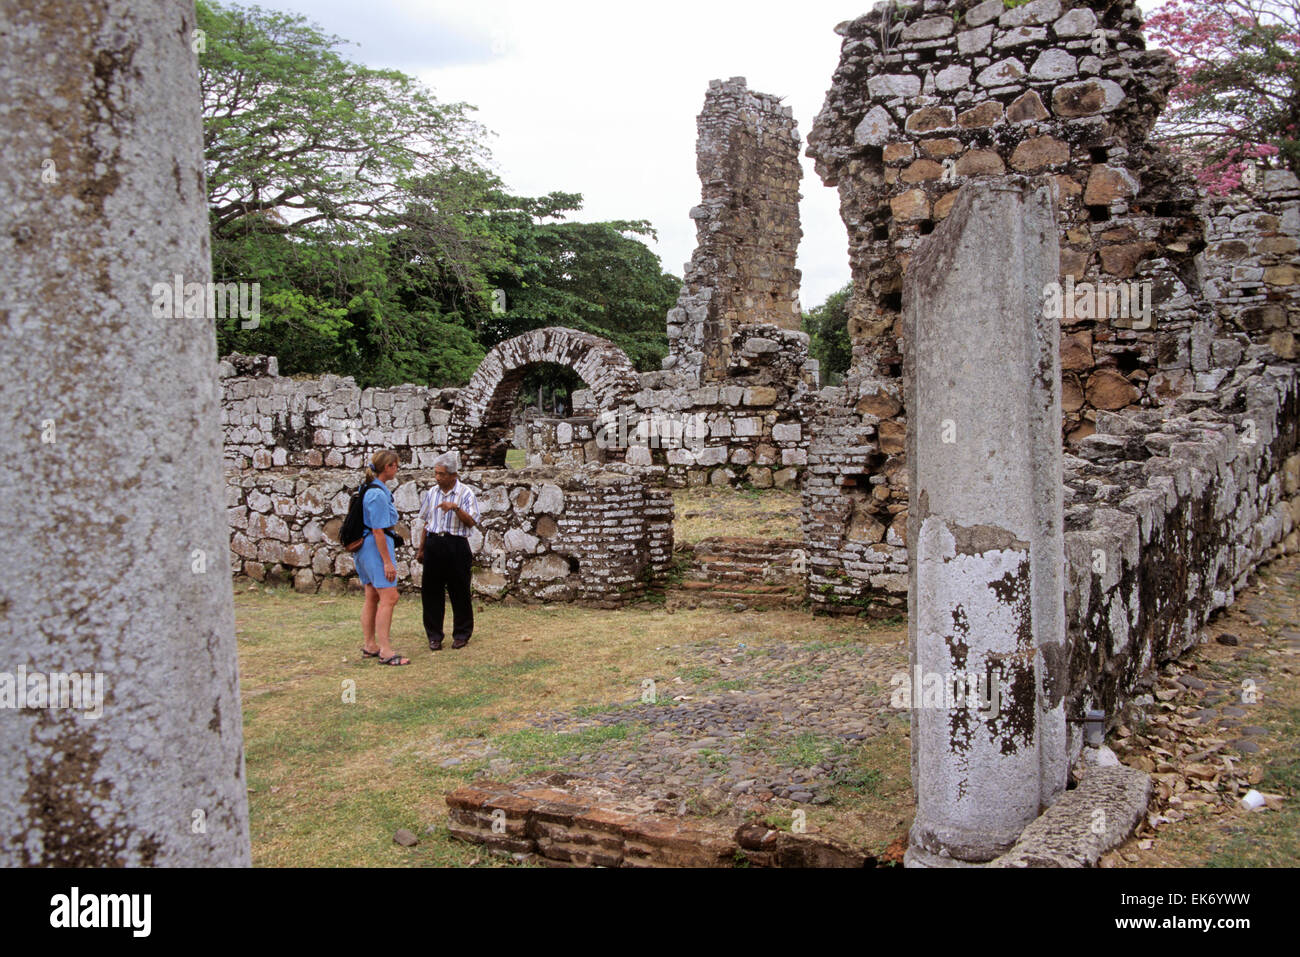 Remains of the 17th century city hall, Panama la Vieja (Old Panama City), Panama. Stock Photo